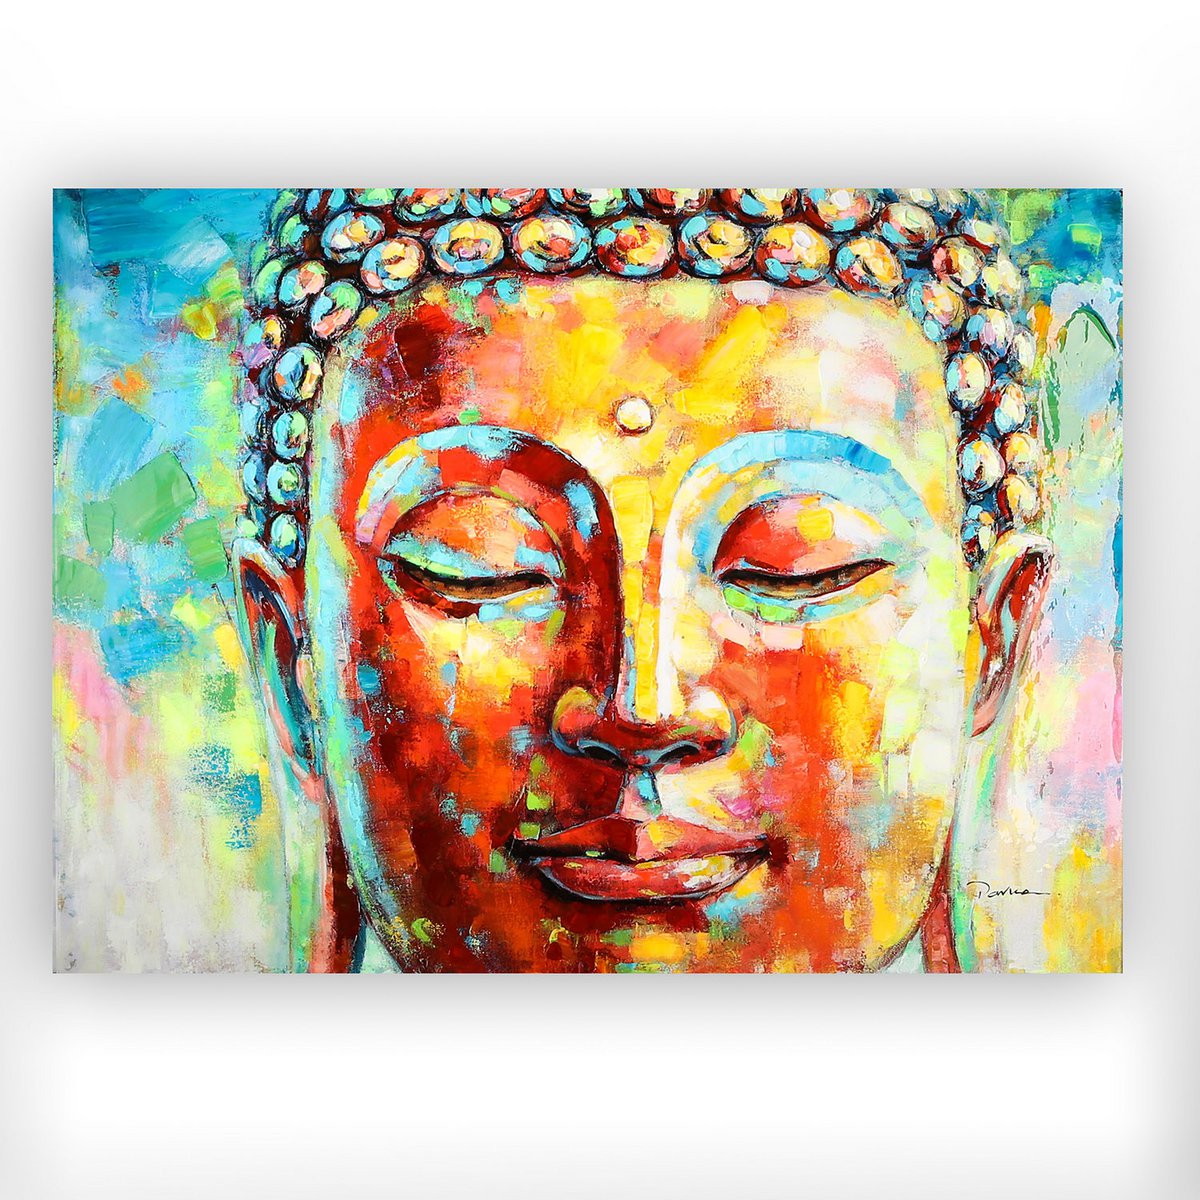 Holz/Leinen Bild "Buddha" bunt,hochglänzend 90x120cm